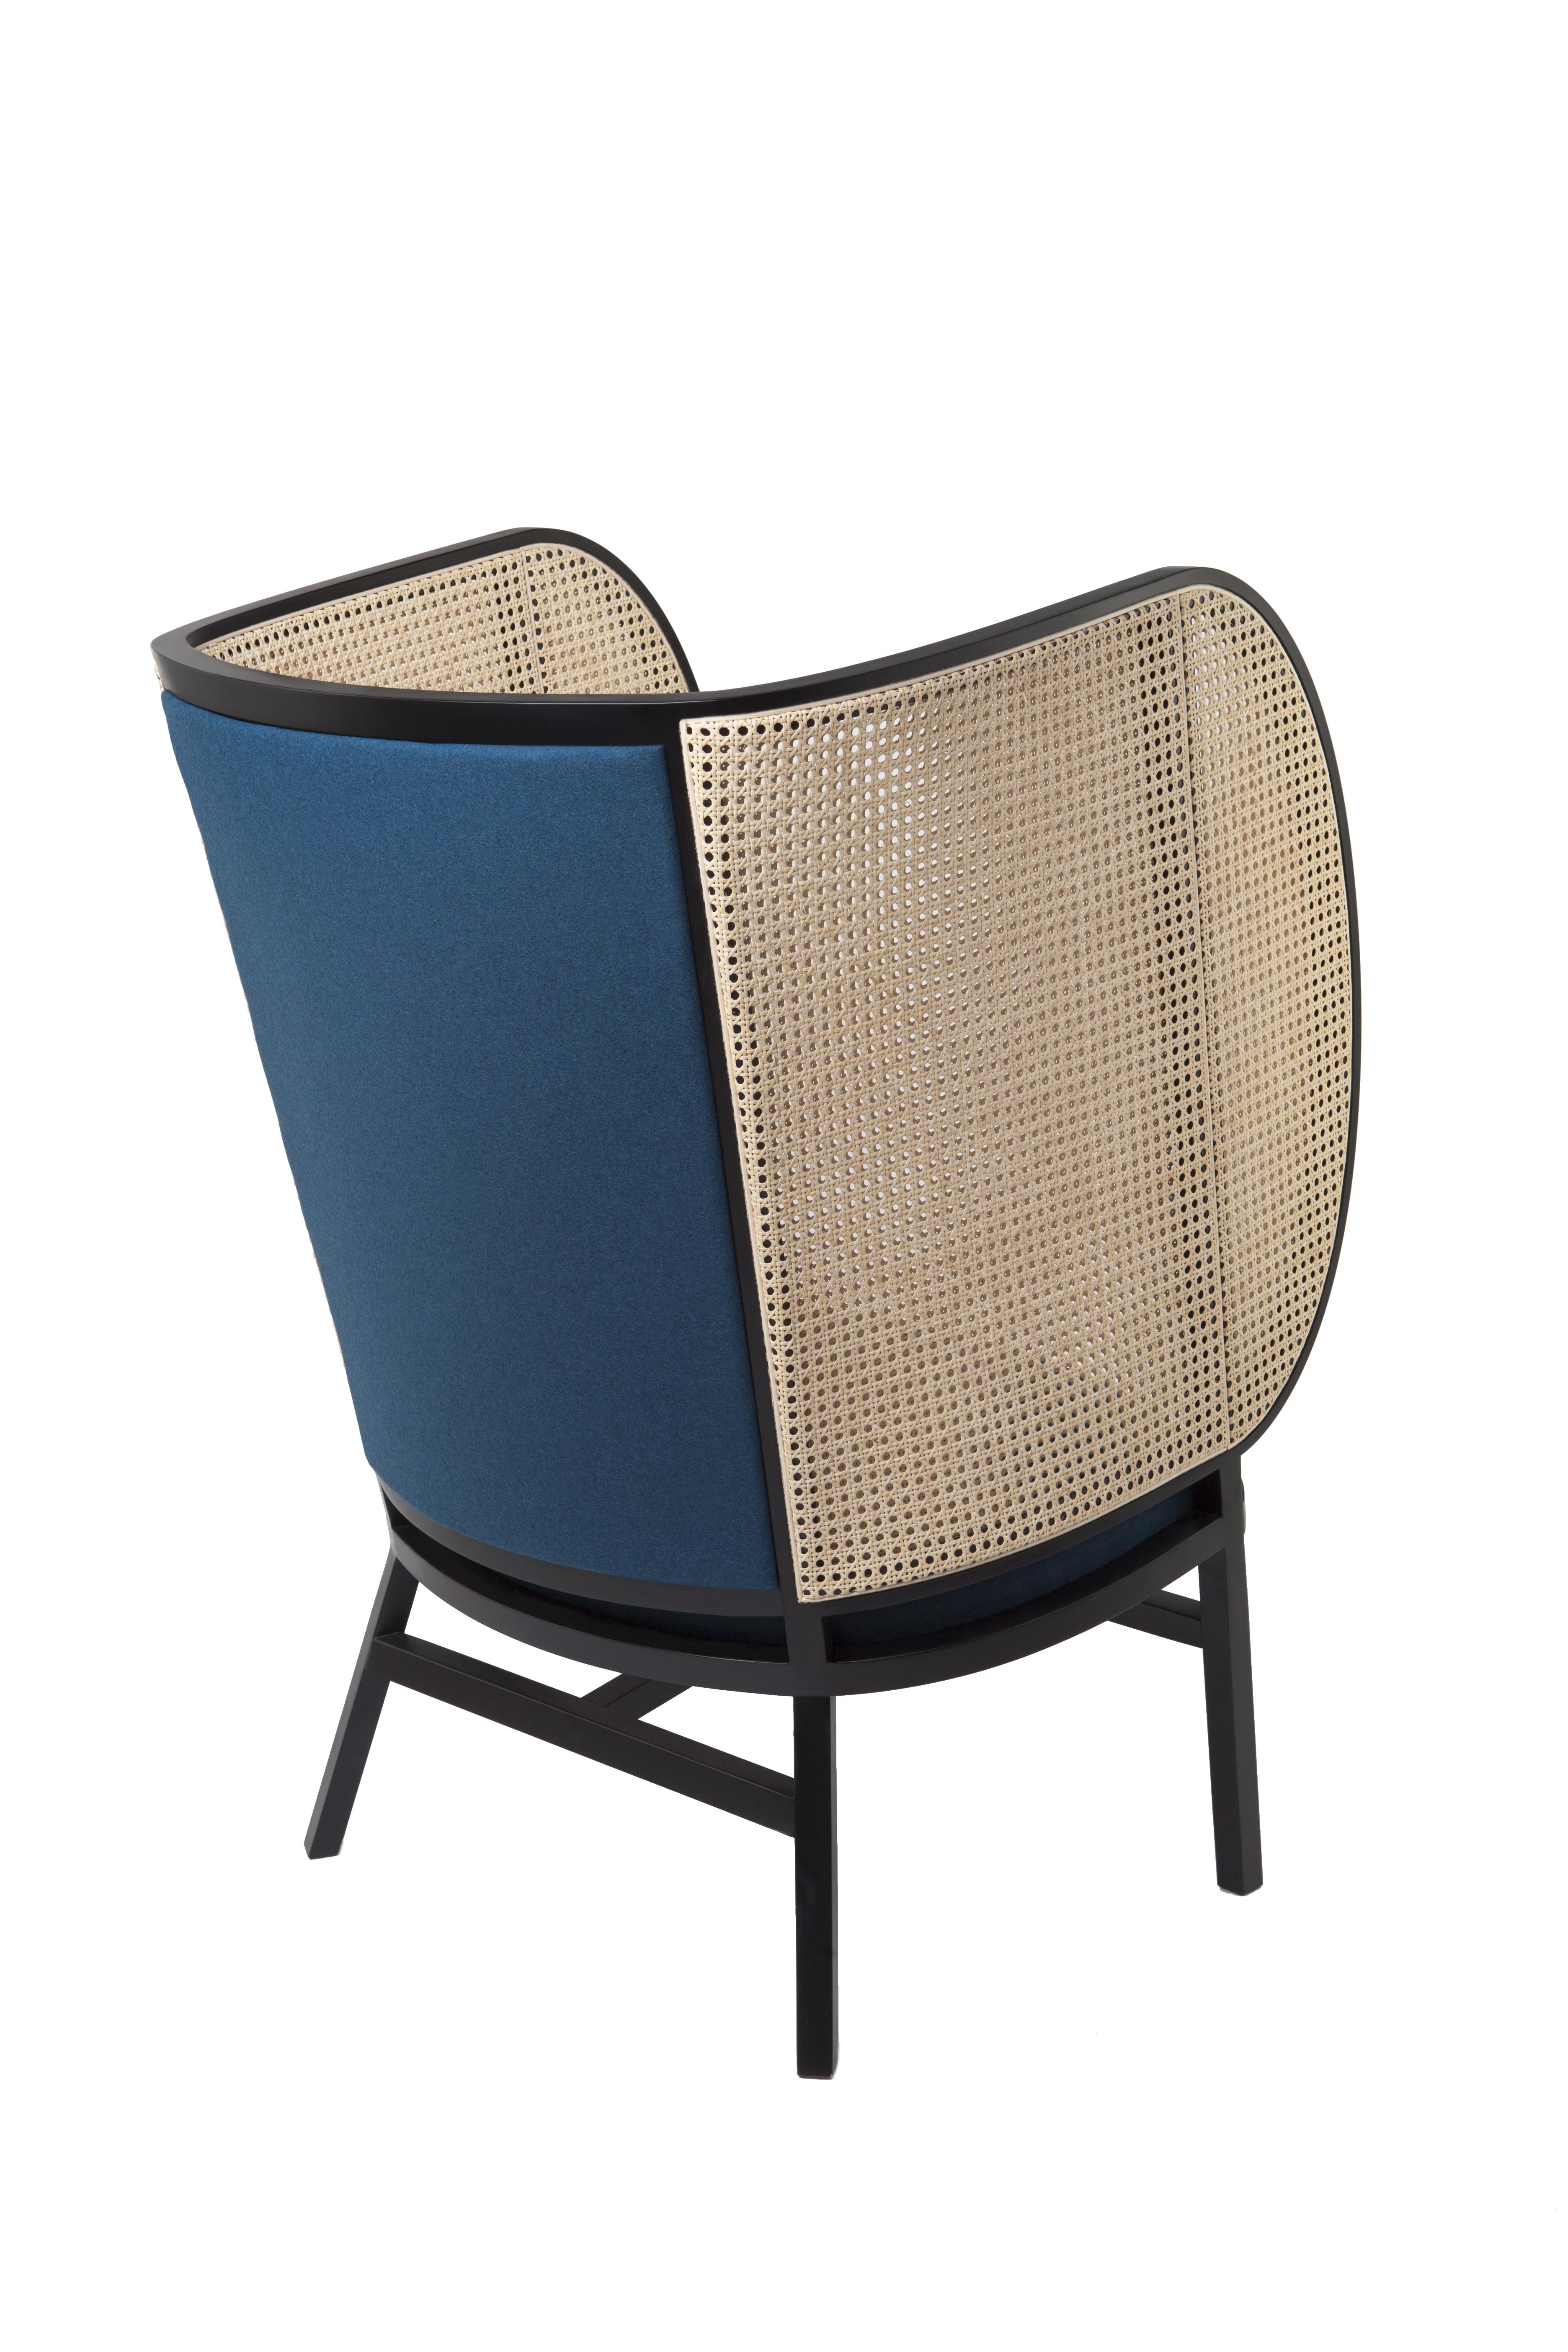 Modern Gebrüder Thonet Vienna GmbH Hideout Lounge Black Chair with Upholstered Backrest For Sale